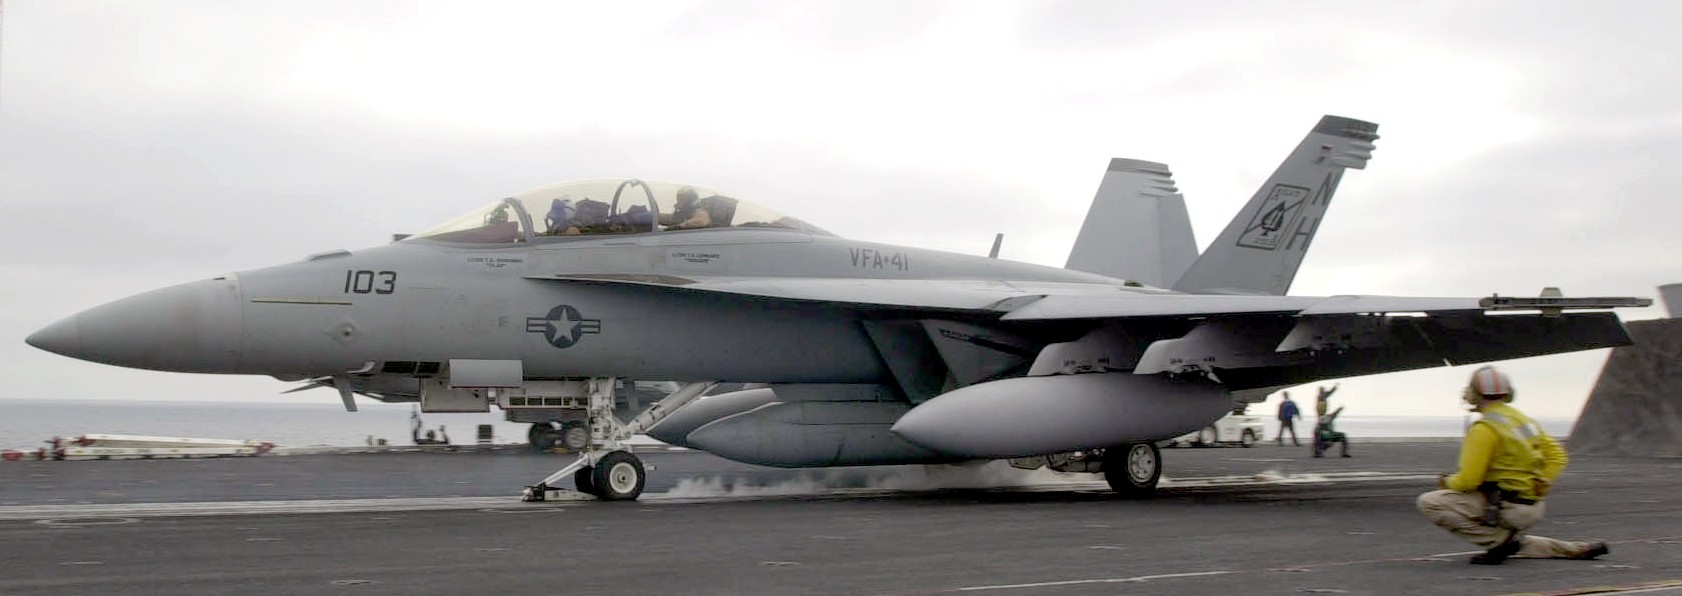 vfa-41 black aces strike fighter squadron f/a-18f super hornet cvw-11 cvn-68 uss nimitz us navy 198p